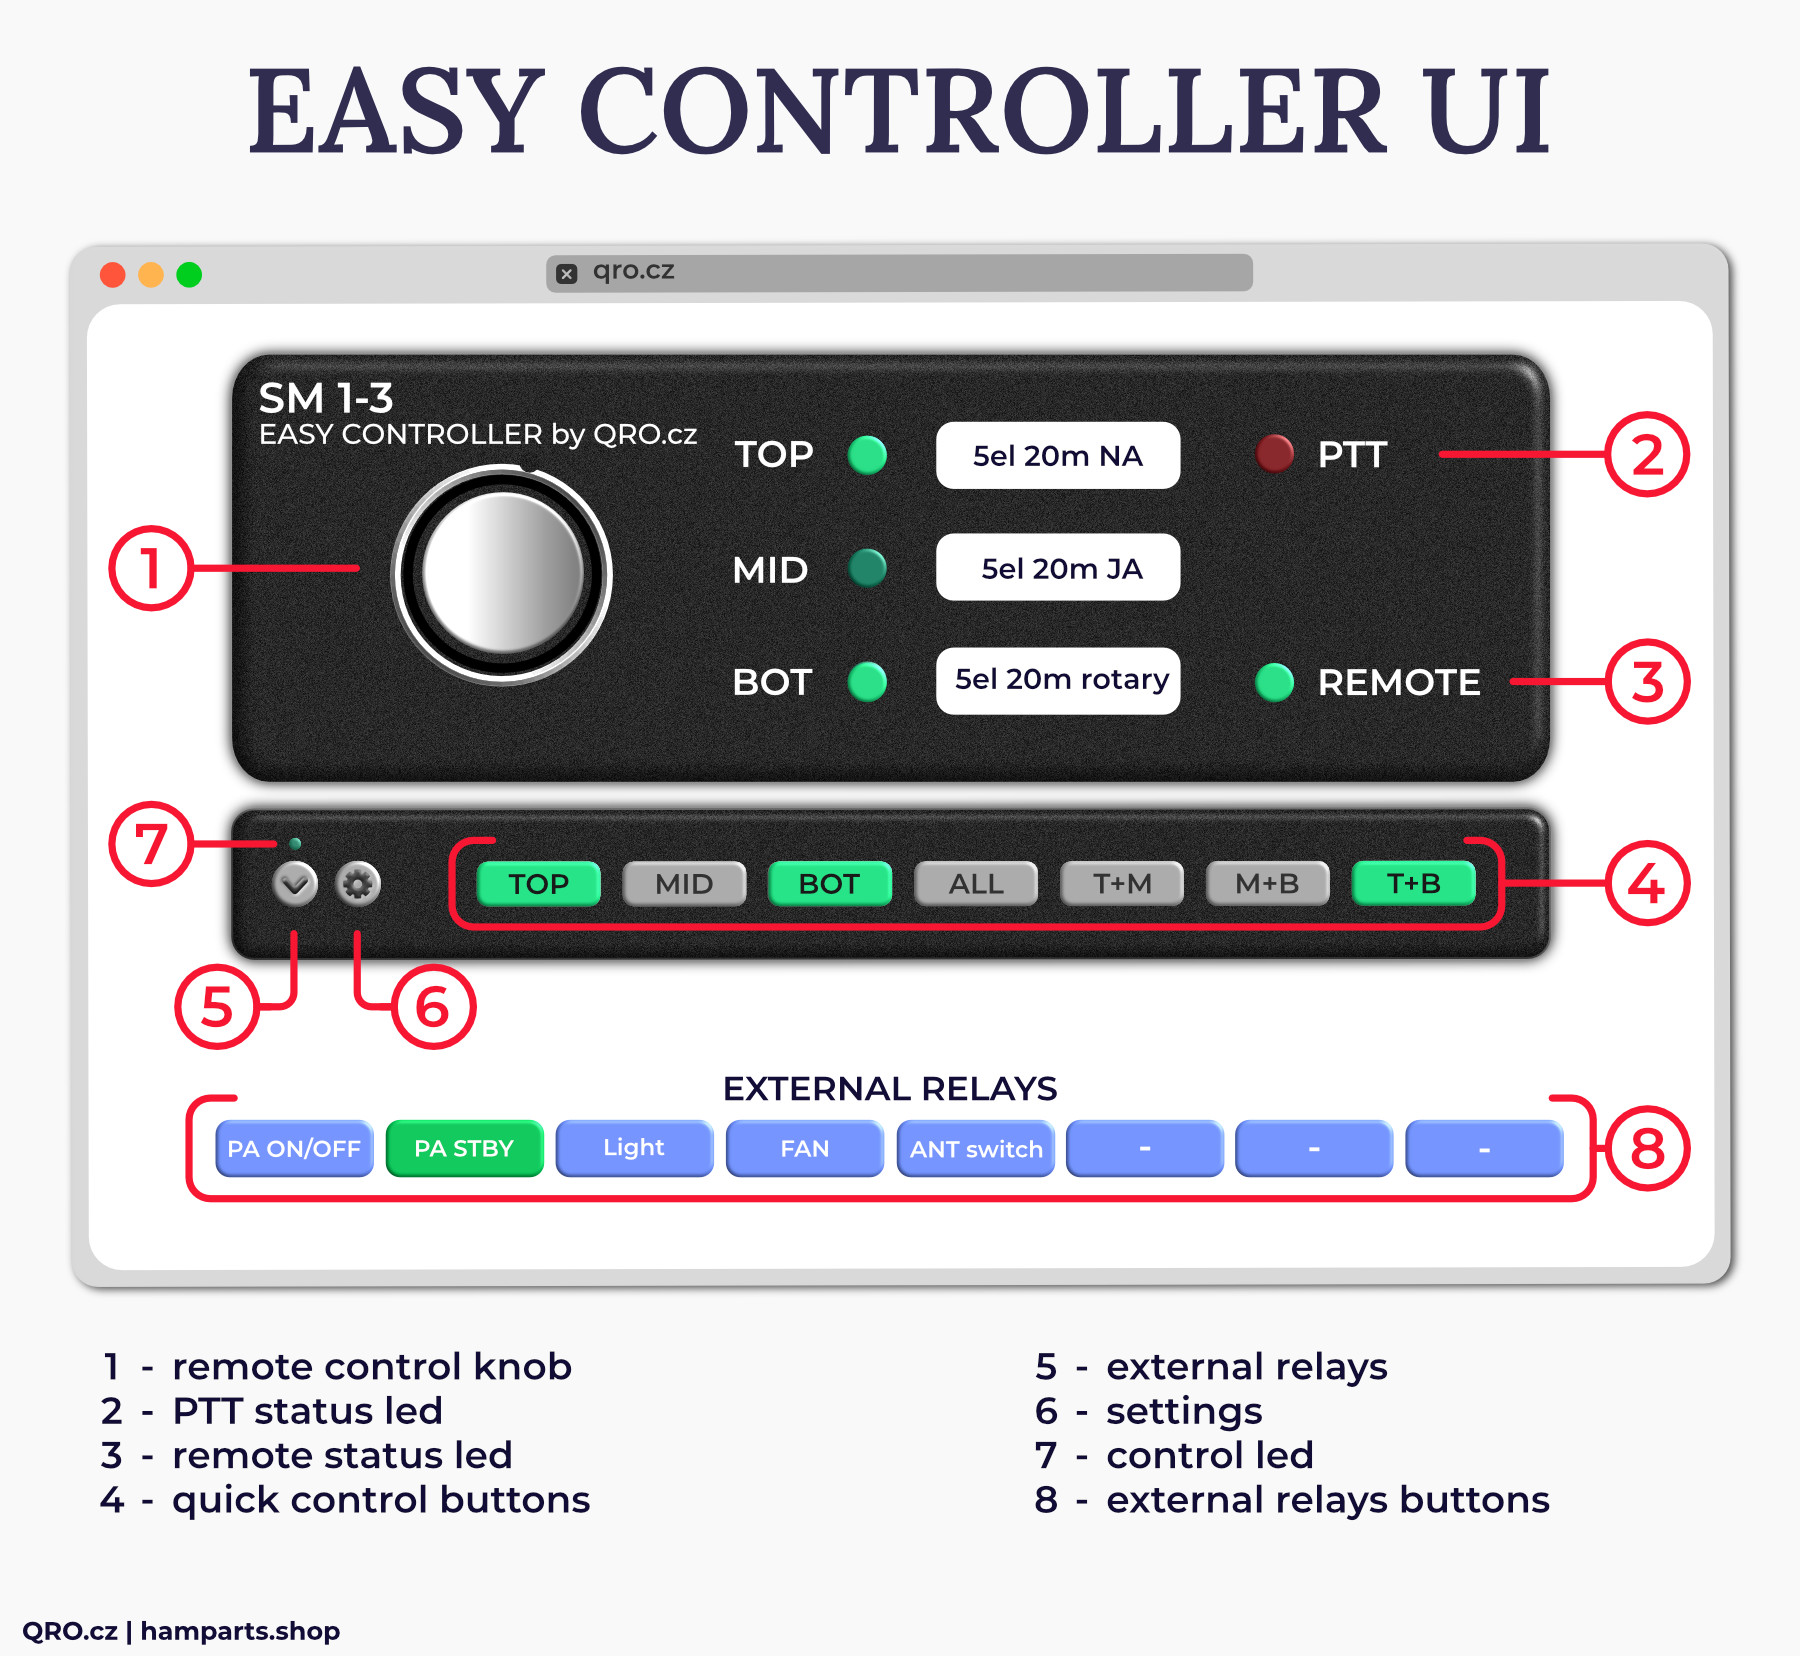 remote control example with easy remote controller qro.cz hamparts.shop